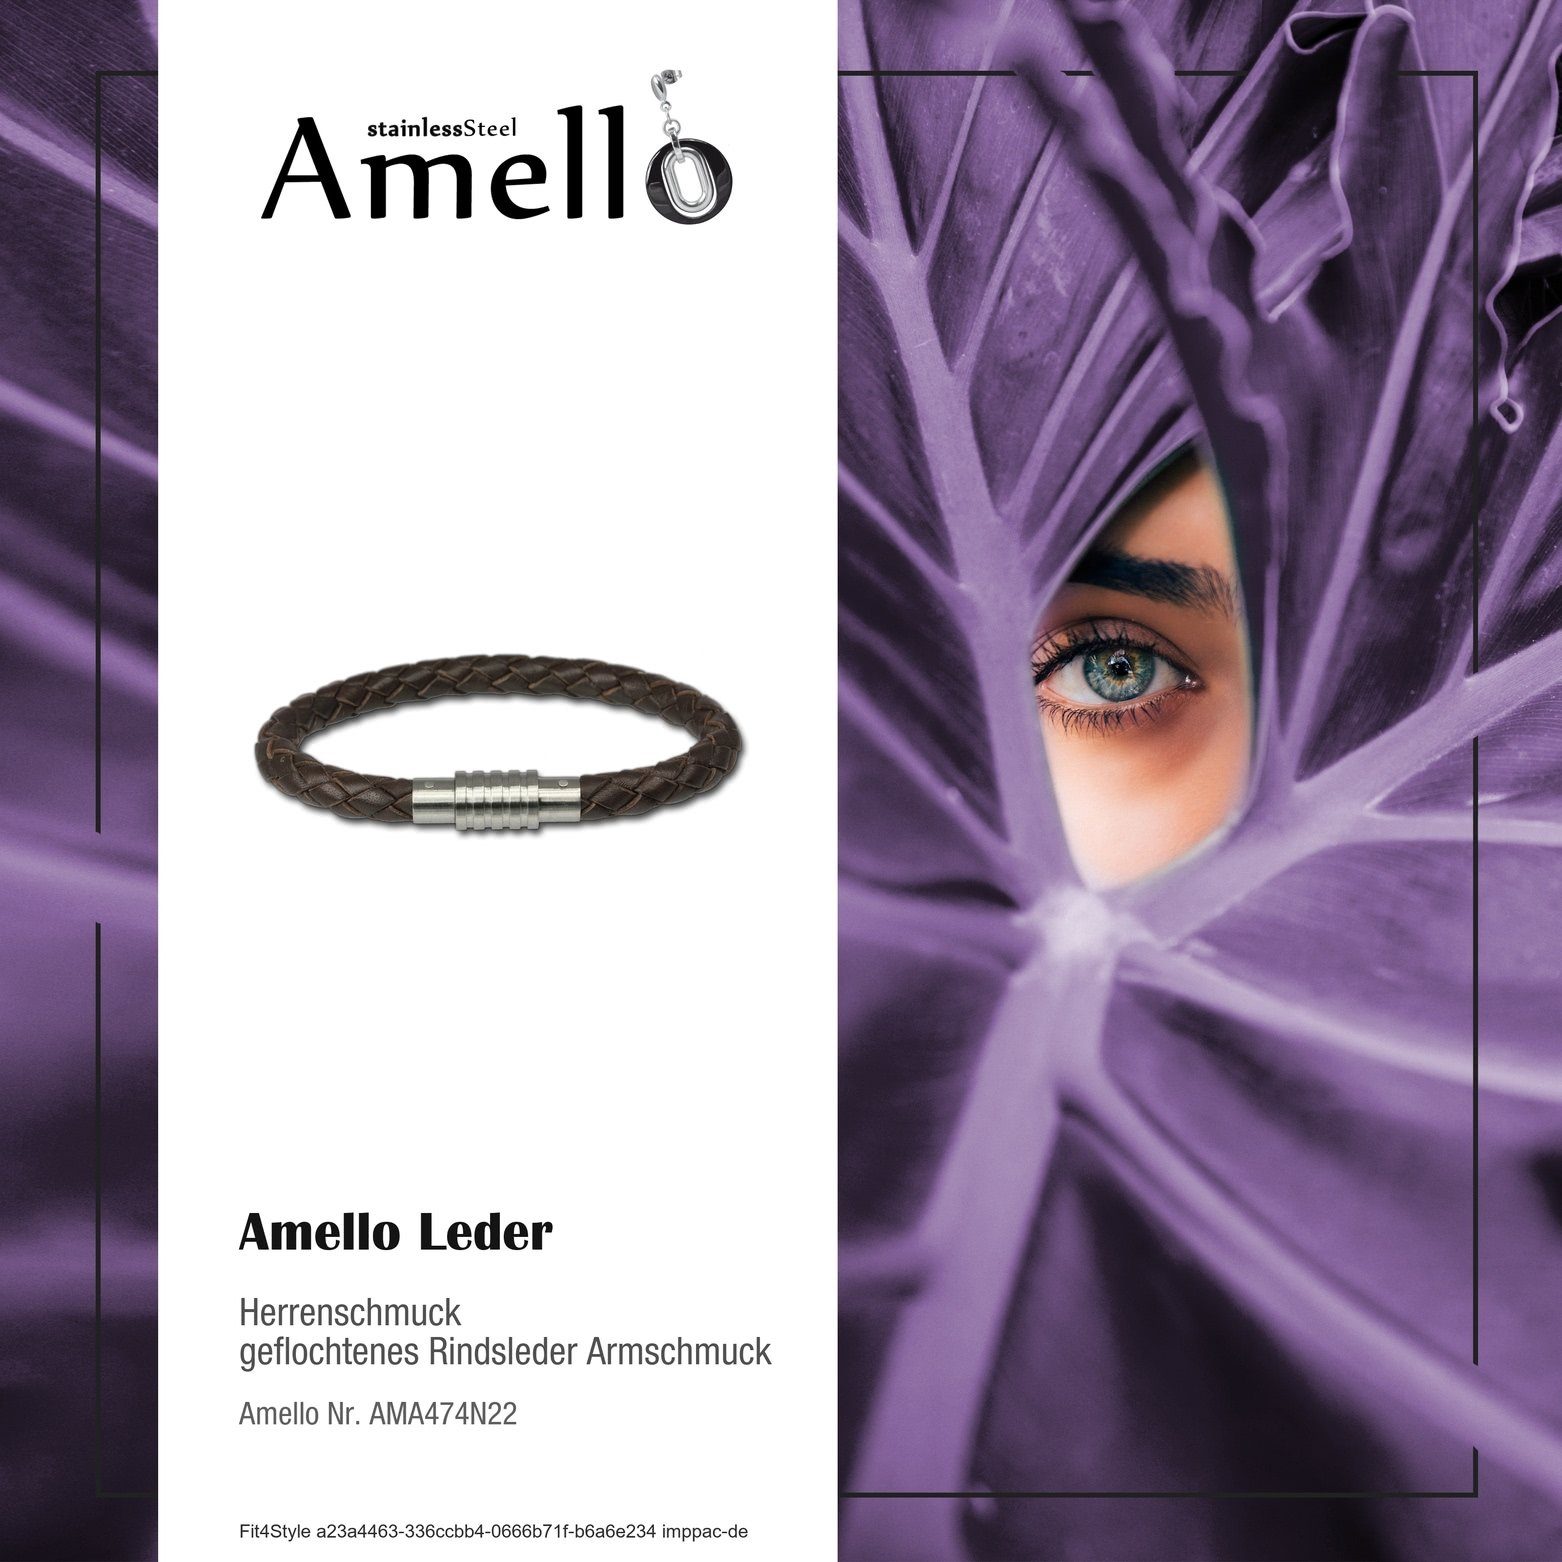 Amello 22cm, (Armband), Armschmuck Herren Edelstahlarmband braun (Stainless braun Edelstahl Steel), ca. Farbe: Armband Herren Armband Amello